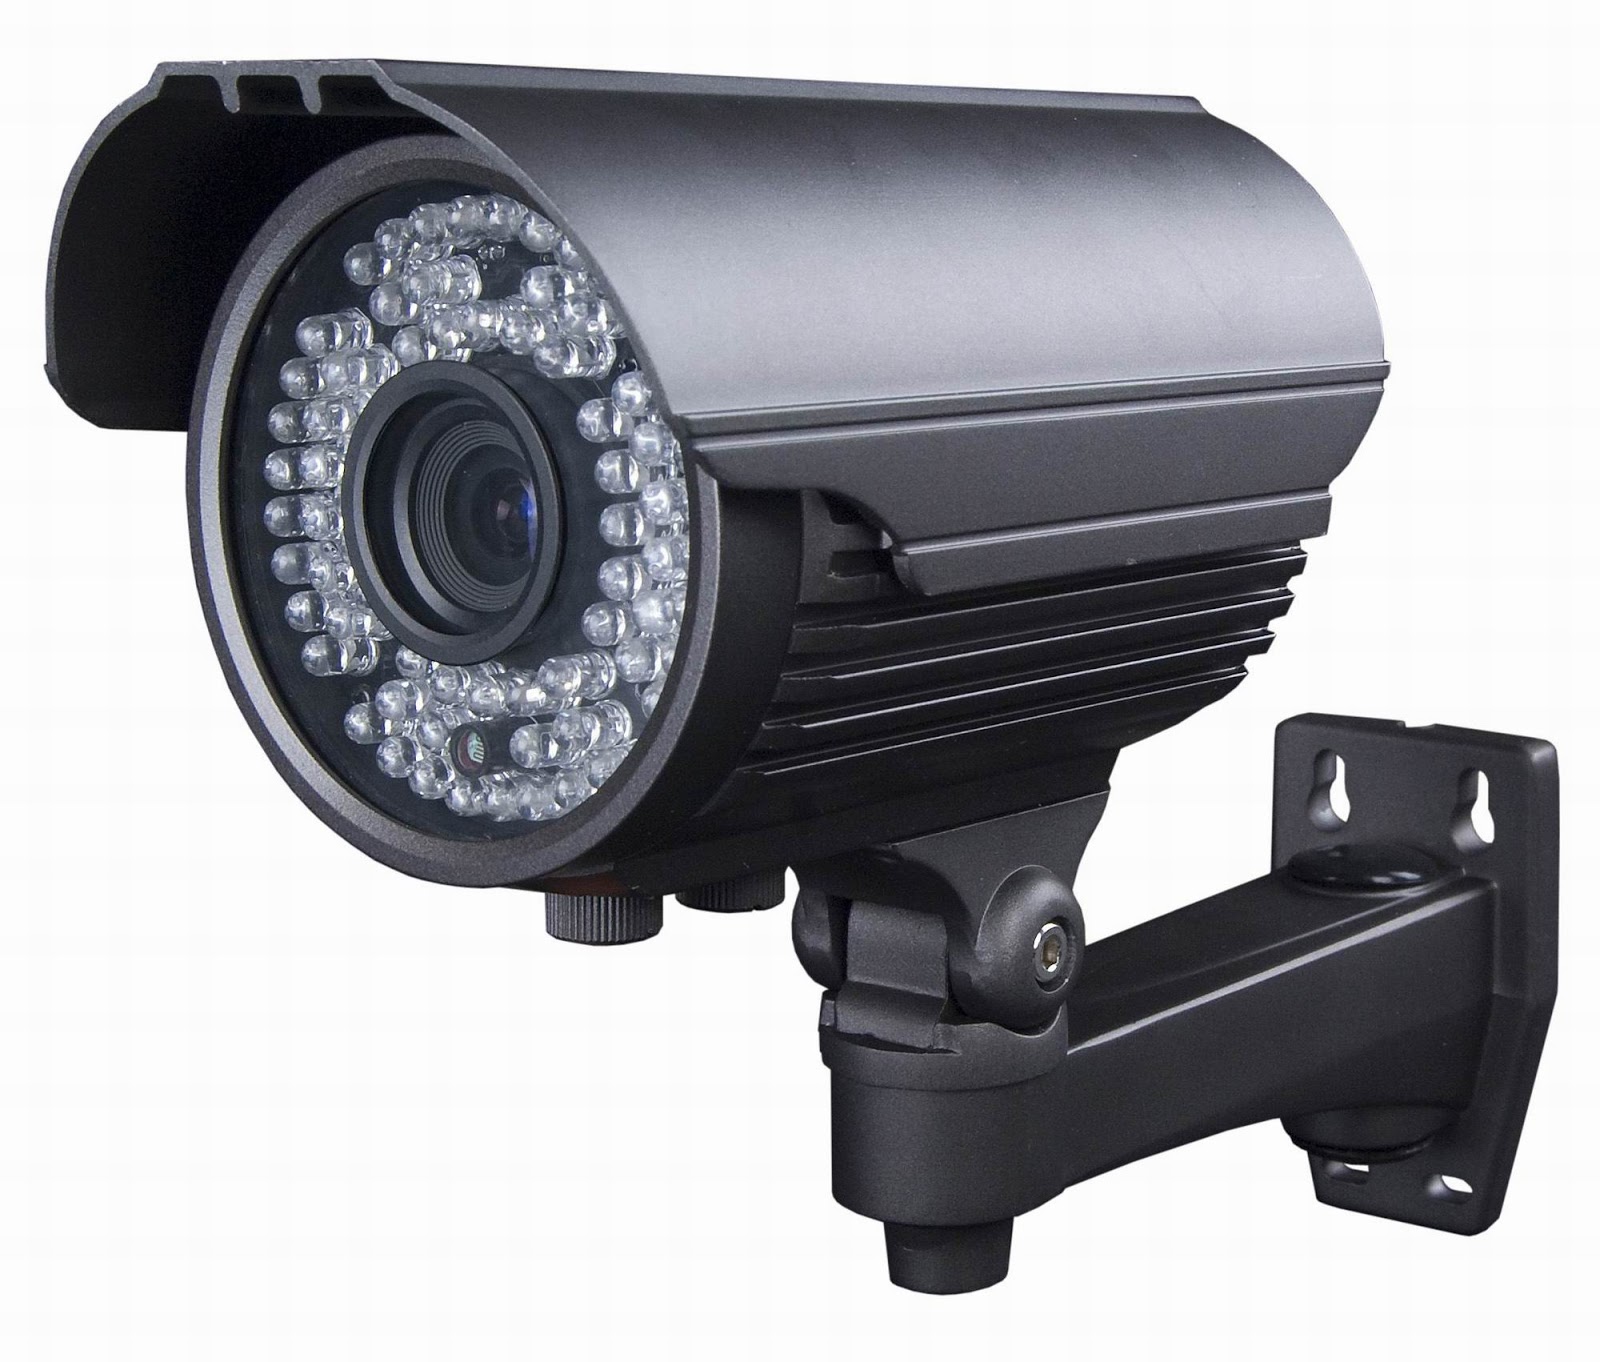 Outdoor video surveillance system